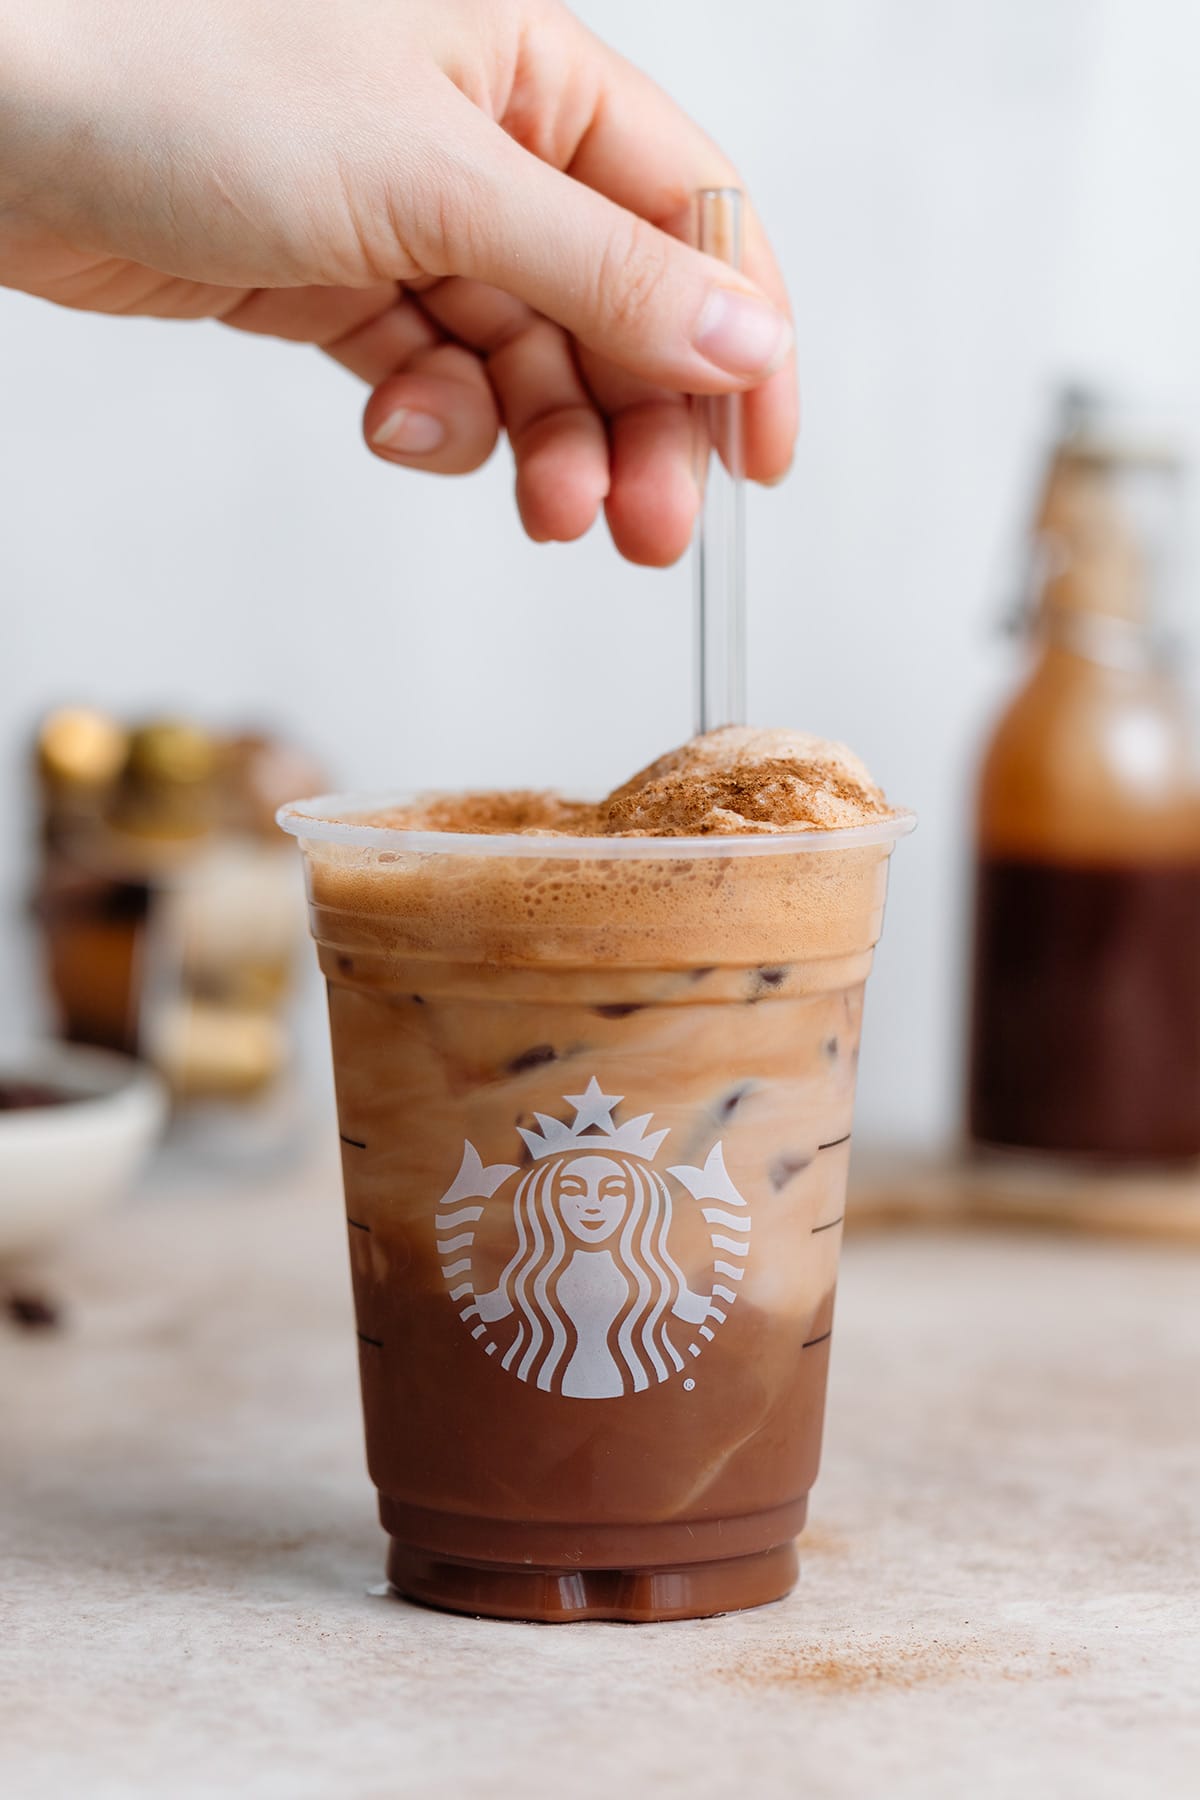 How to Make Starbucks Shaken Chocolate Espresso? 